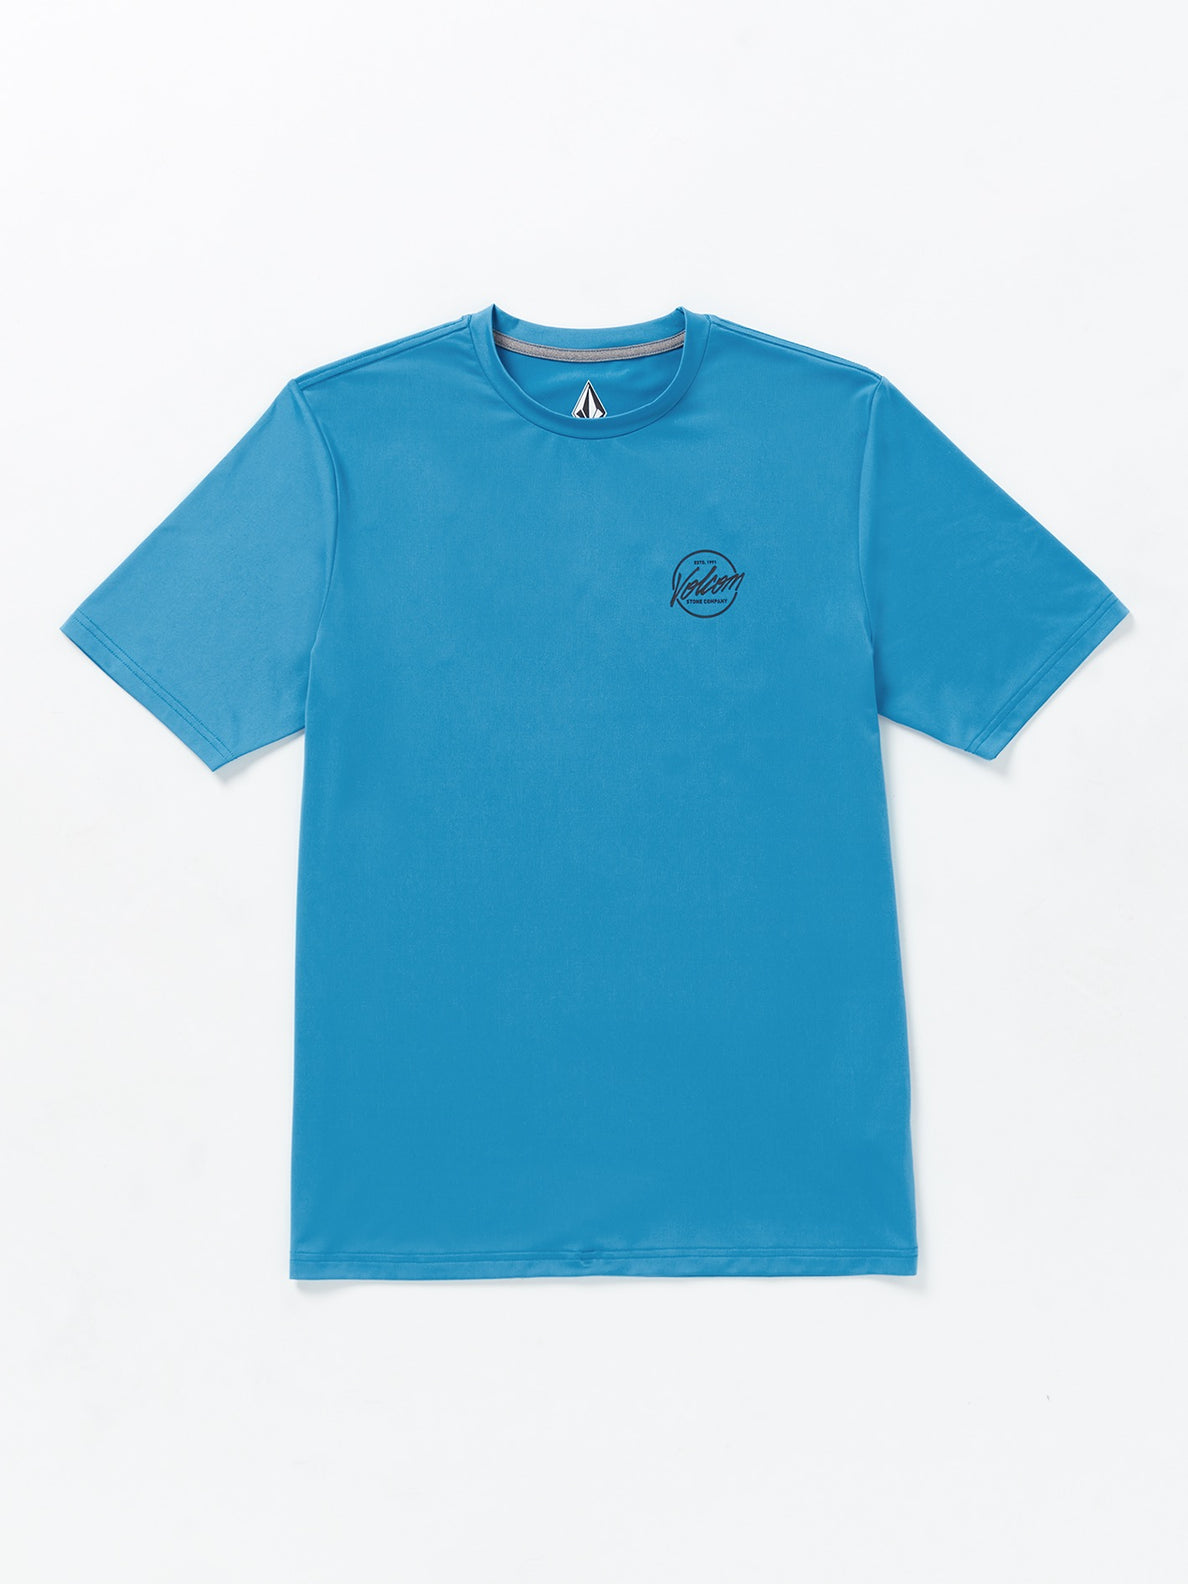 Stone Stamp Short Sleeve Shirt - Tidal Blue